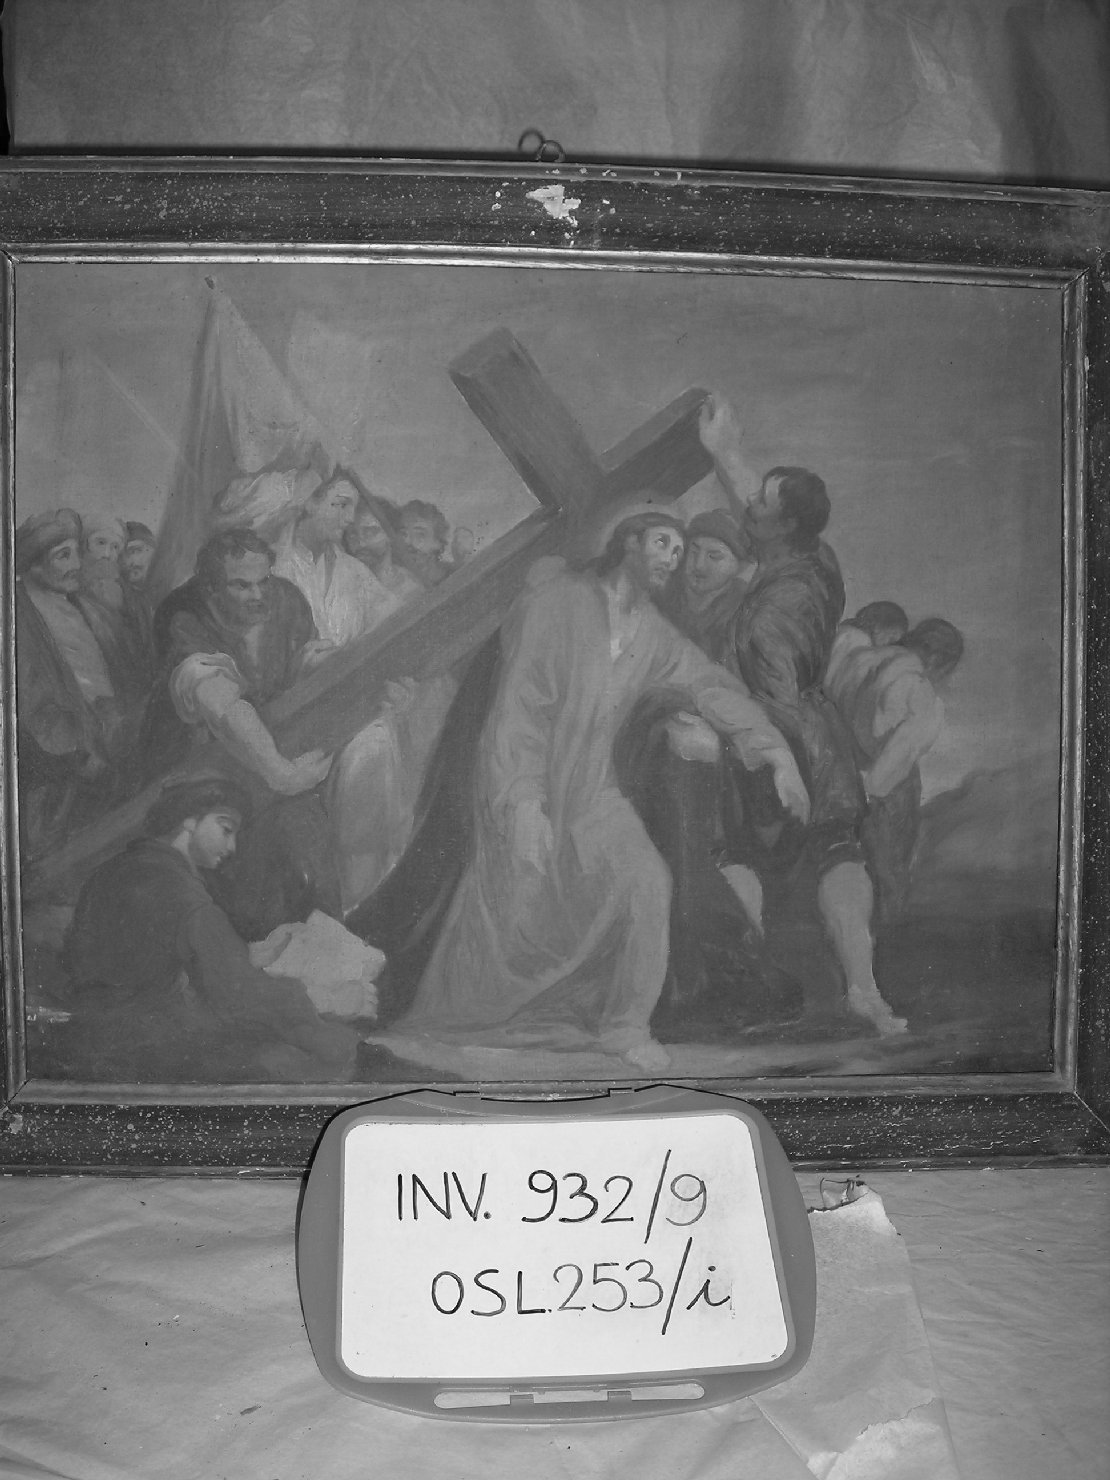 vera croce eretta sul Golgota (dipinto) - ambito toscano (sec. XIX)